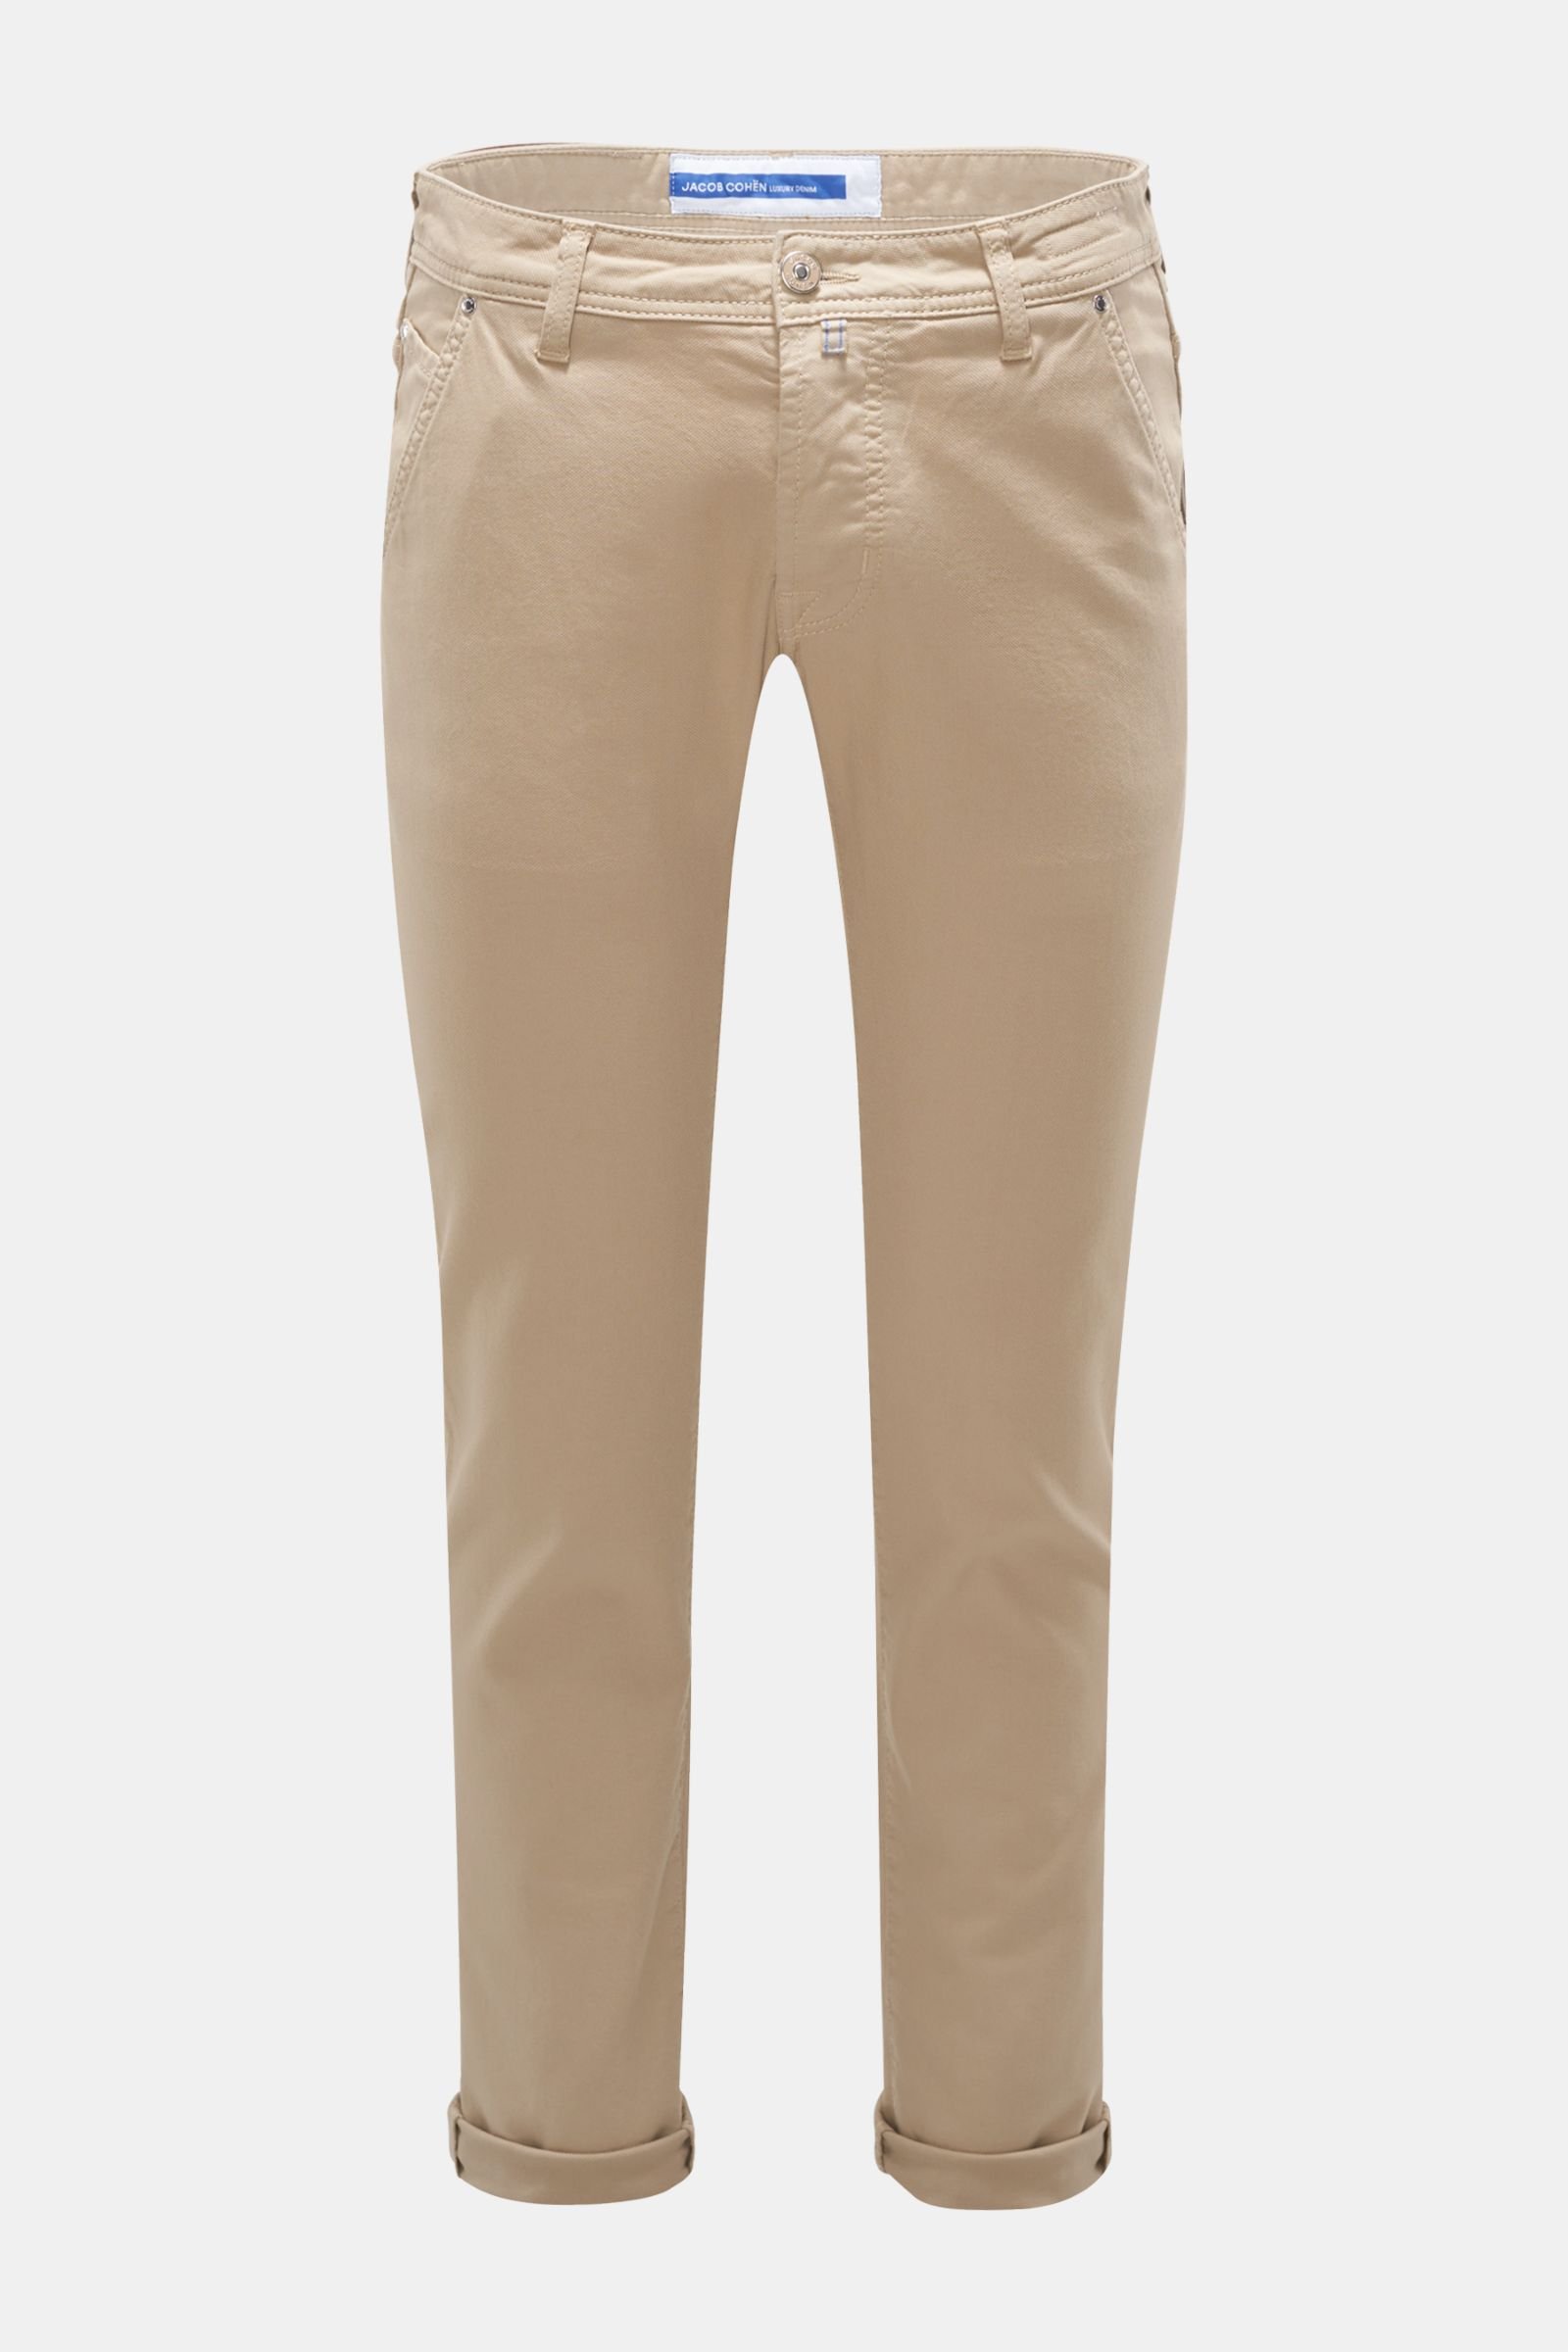 'Leonard' cotton trousers beige (previously J613)